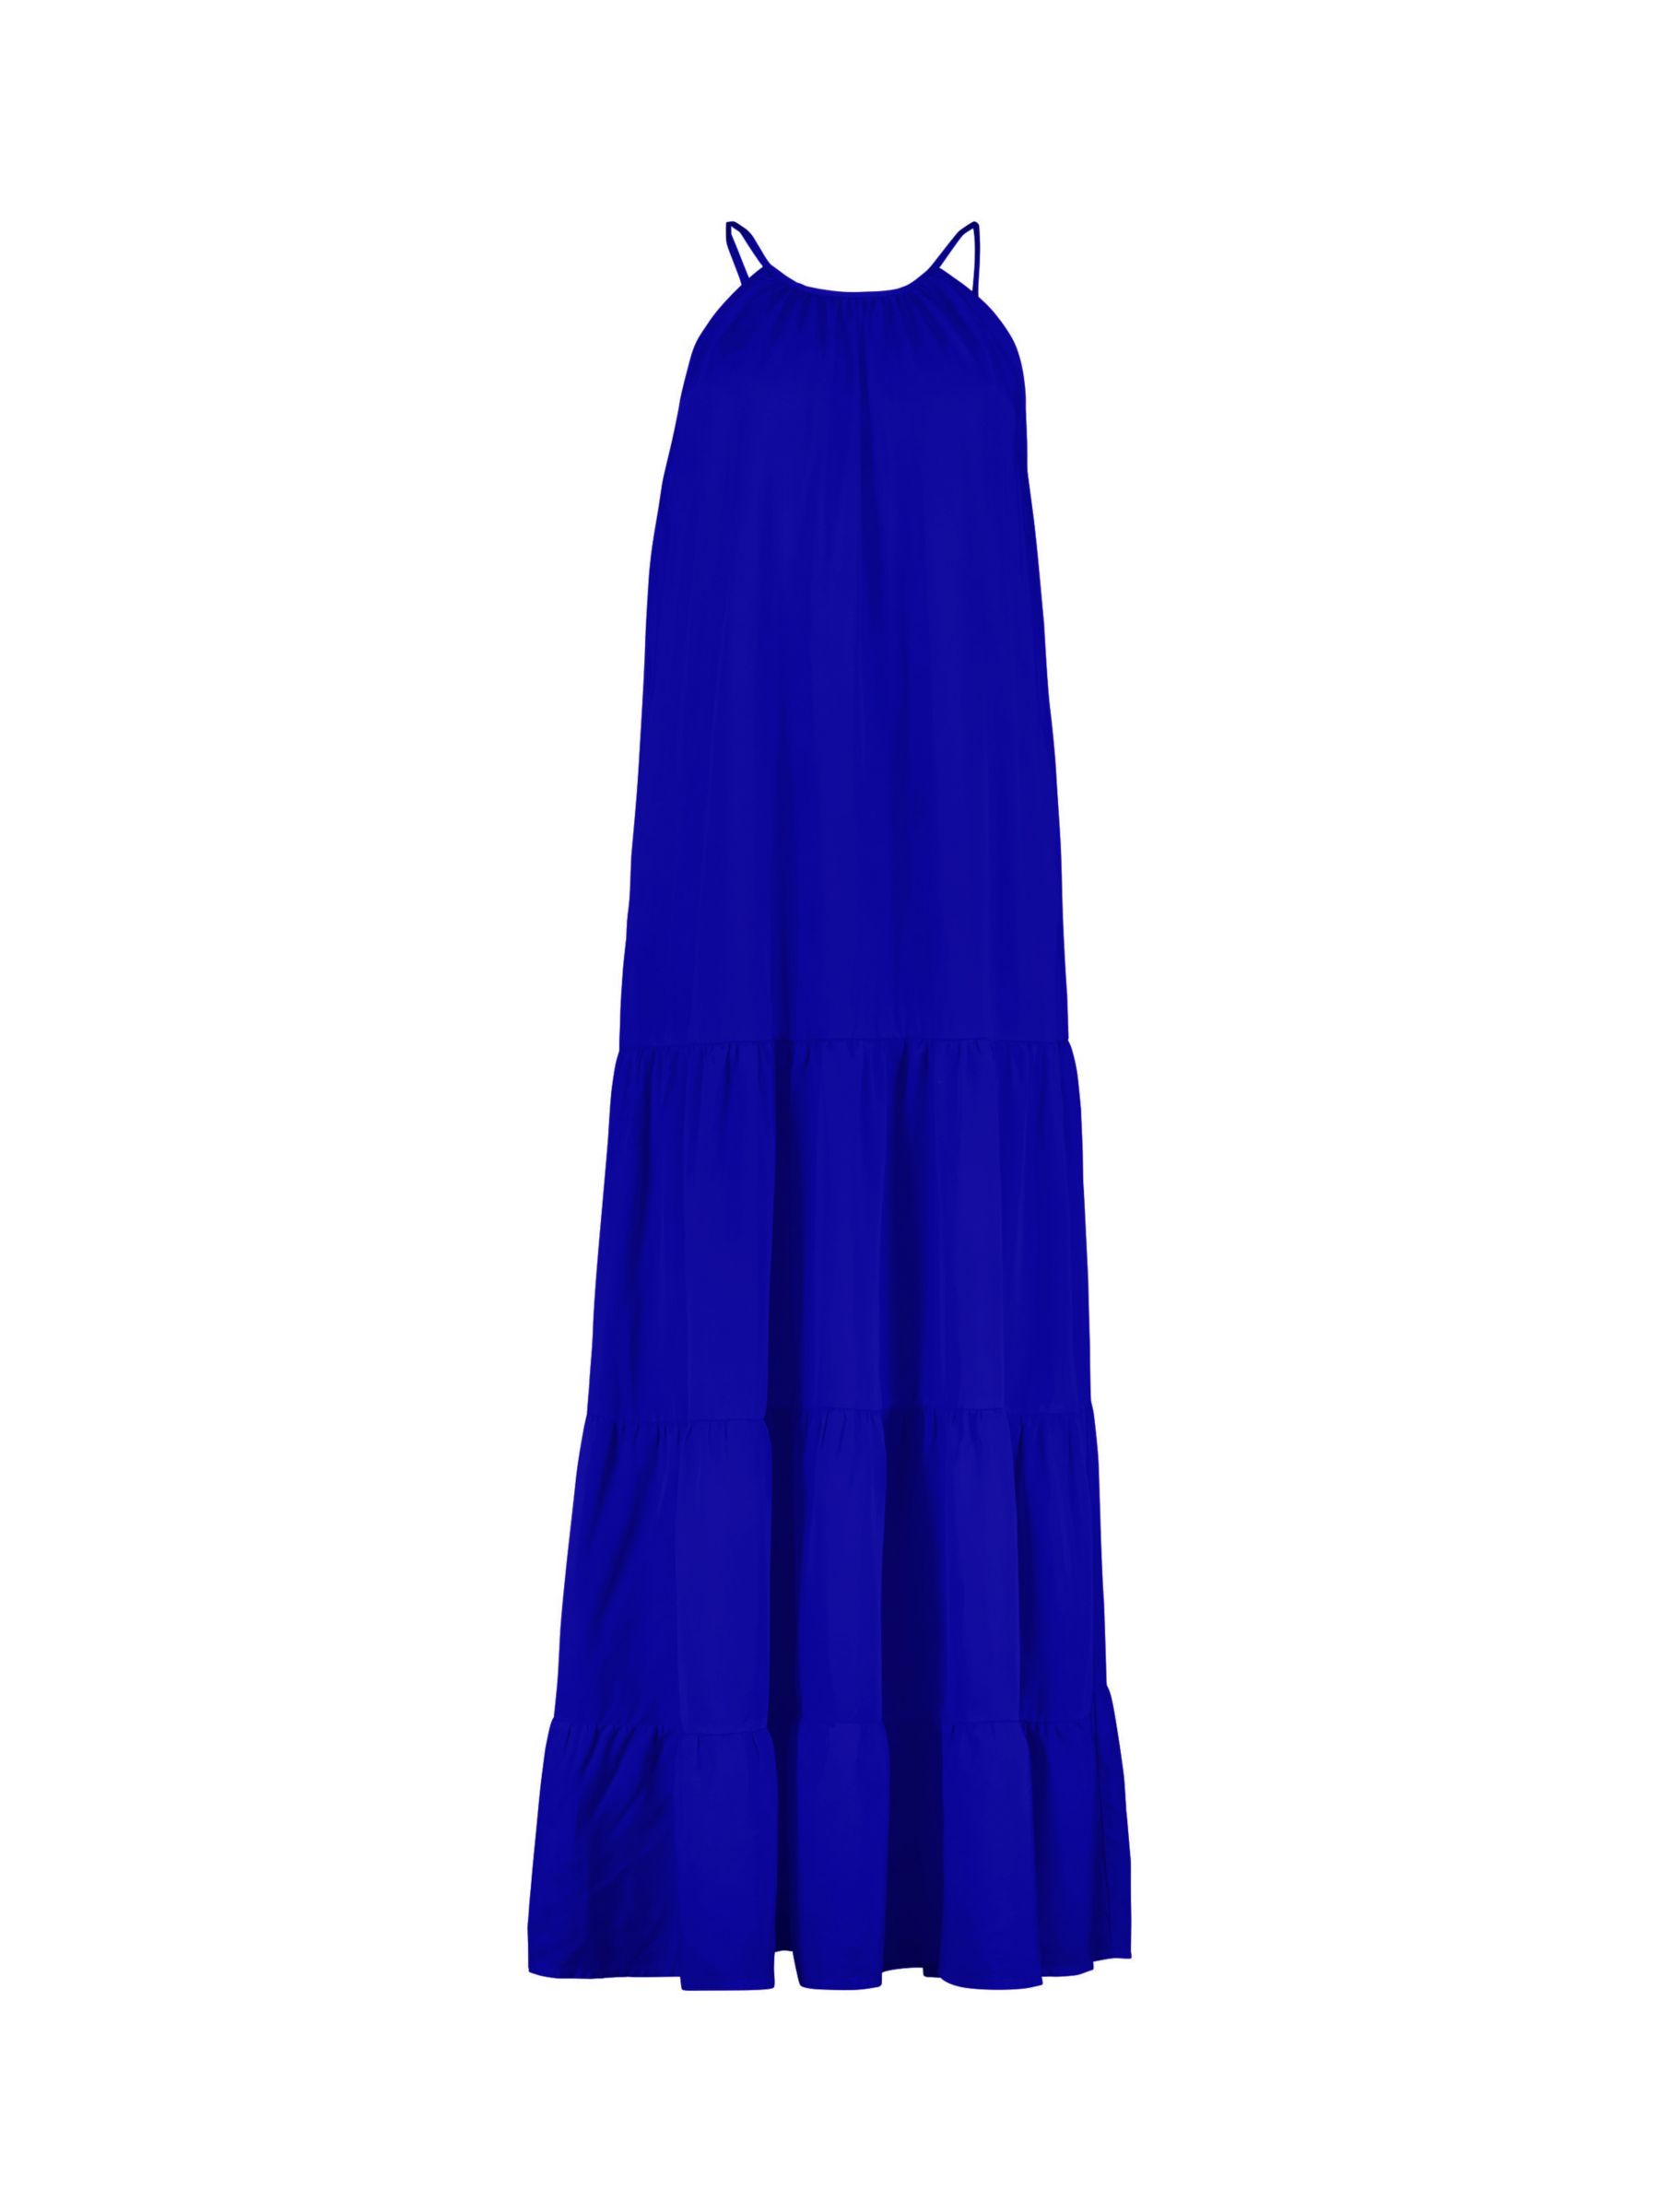 Baukjen Everly Sleeveless Tiered Maxi Dress, Royal Blue, 16